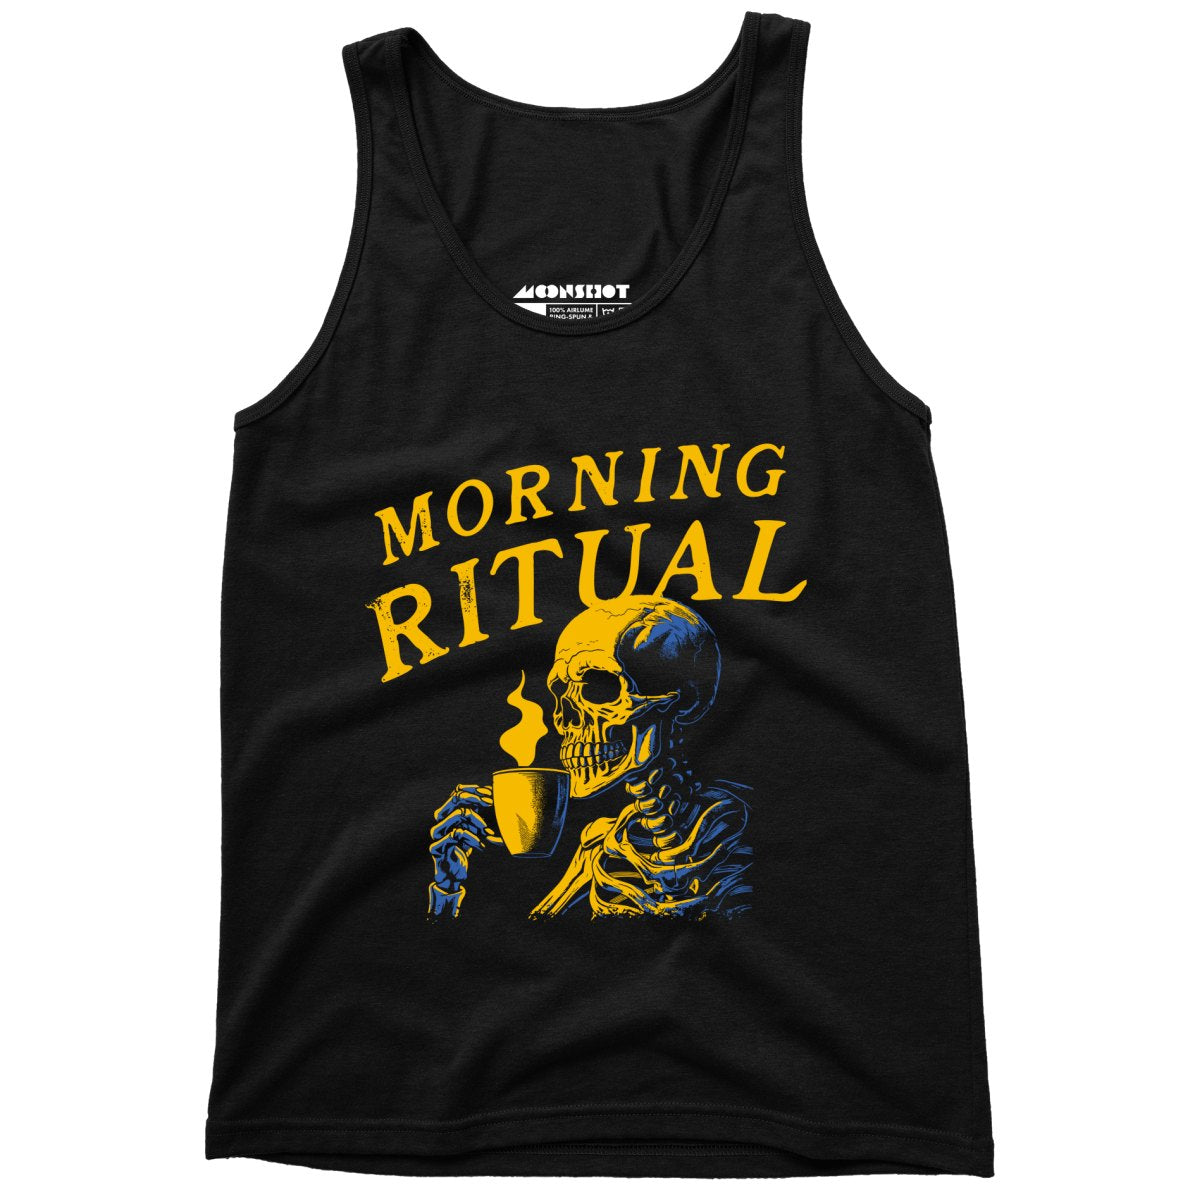 Morning Ritual - Unisex Tank Top